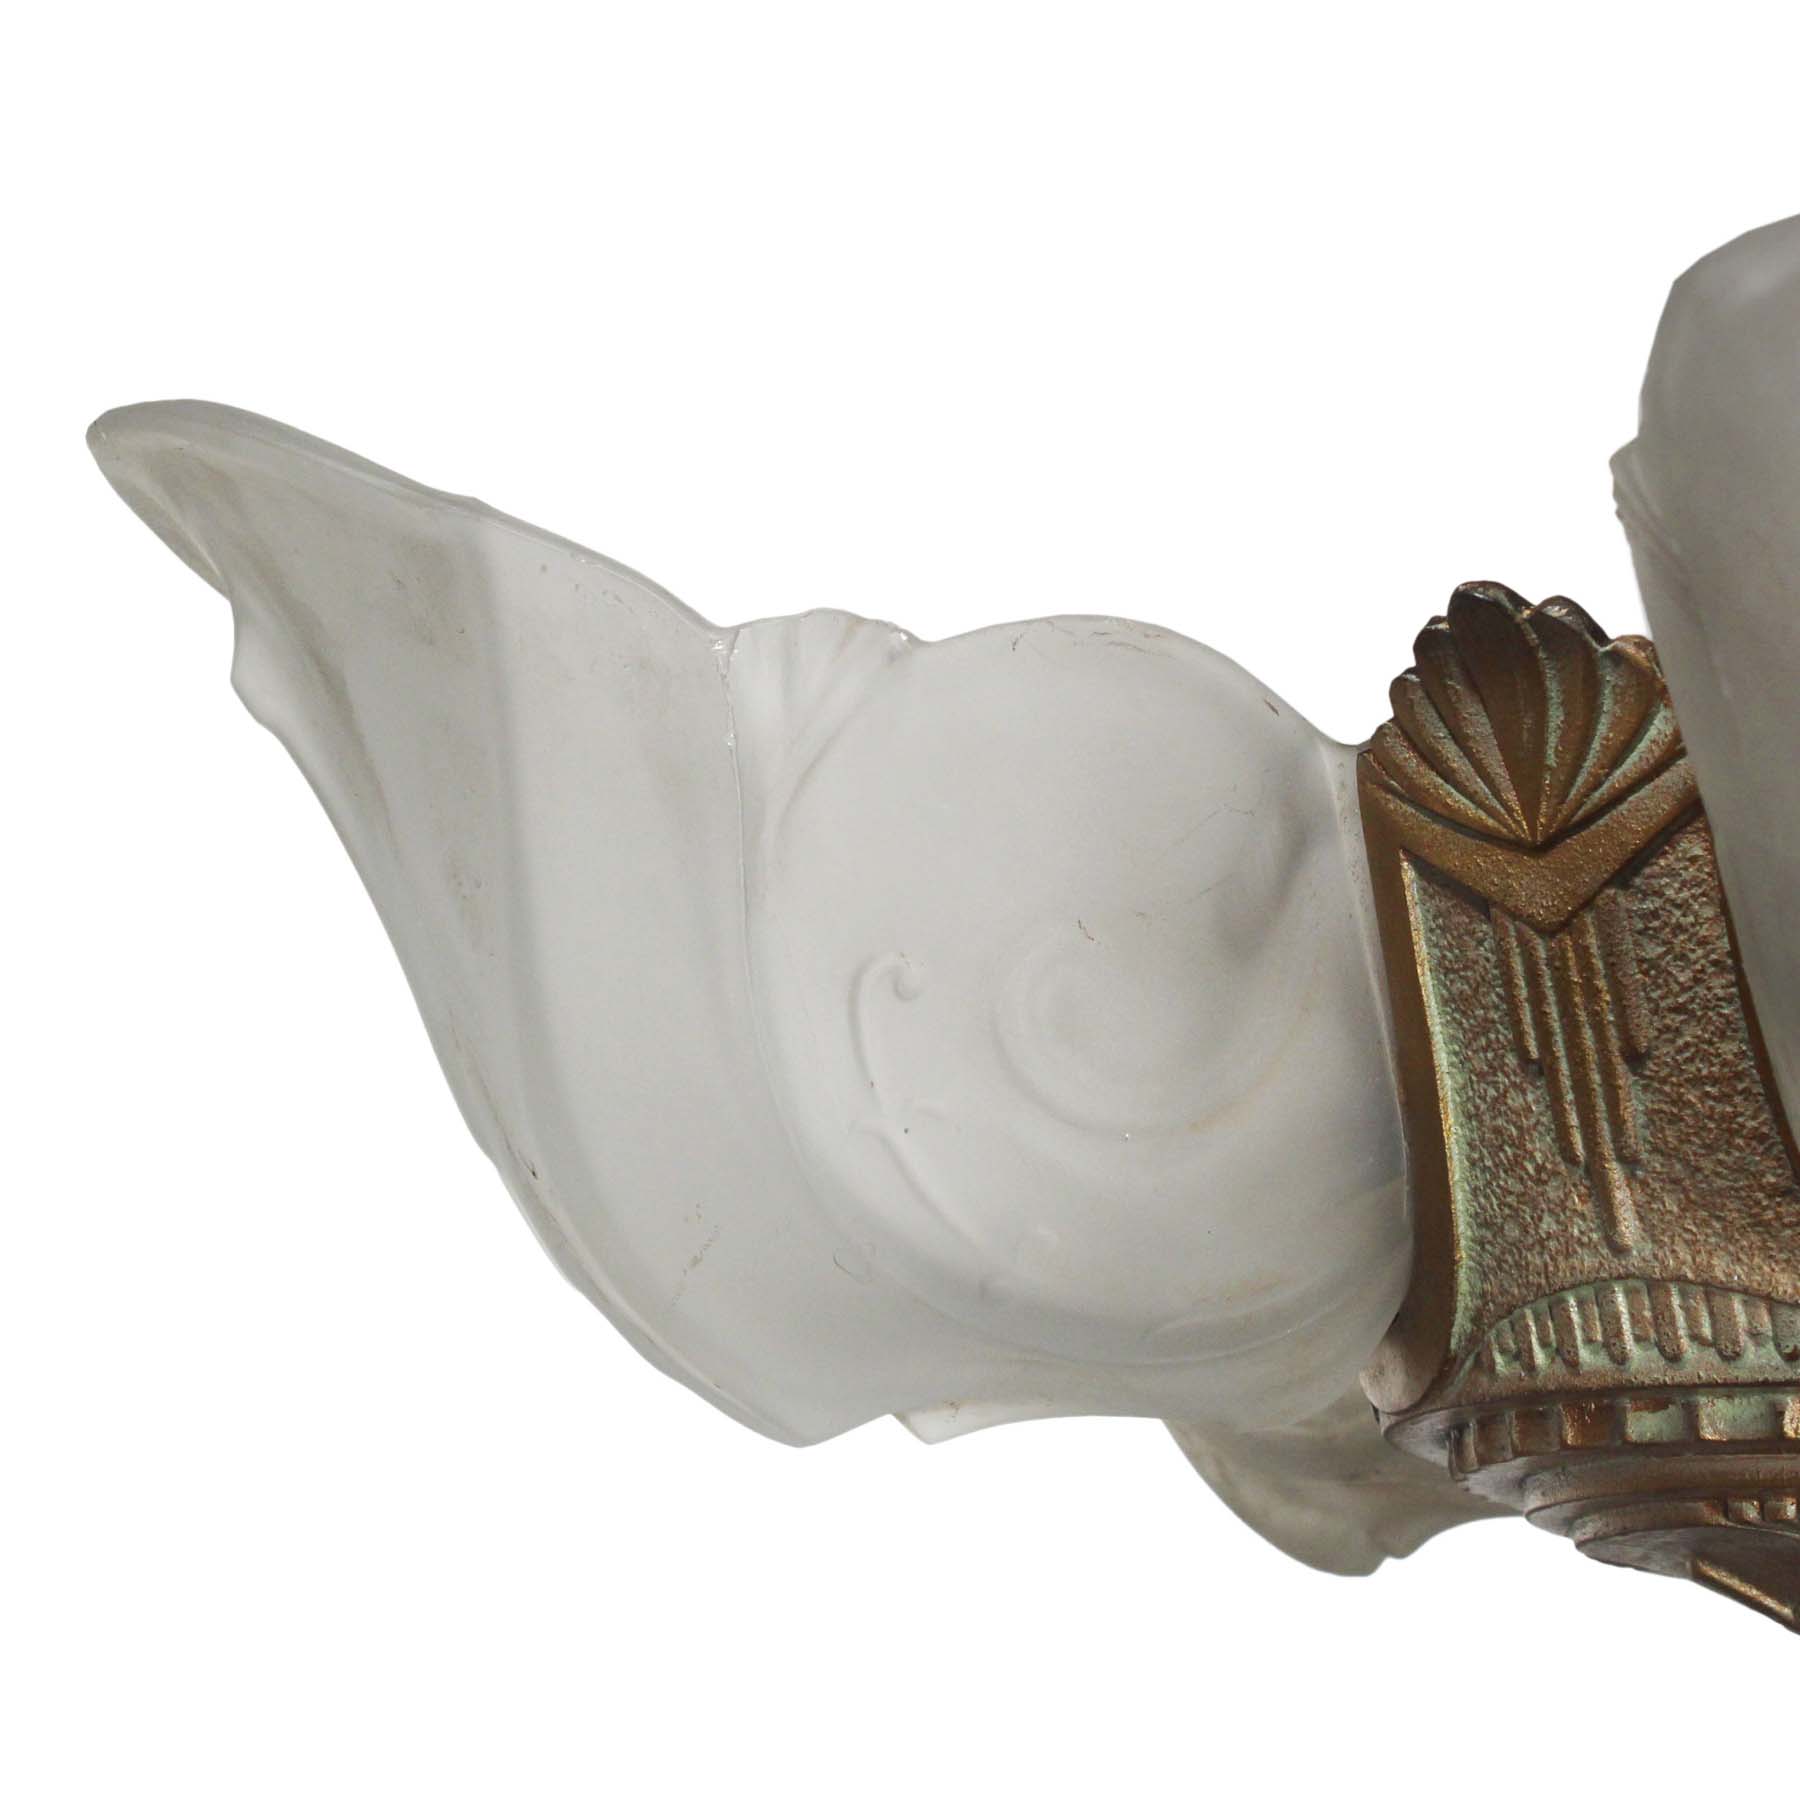 SOLD Antique Five-Light Art Deco Slip Shade Chandelier, "Warwick” Design by Glasco Electric-67732